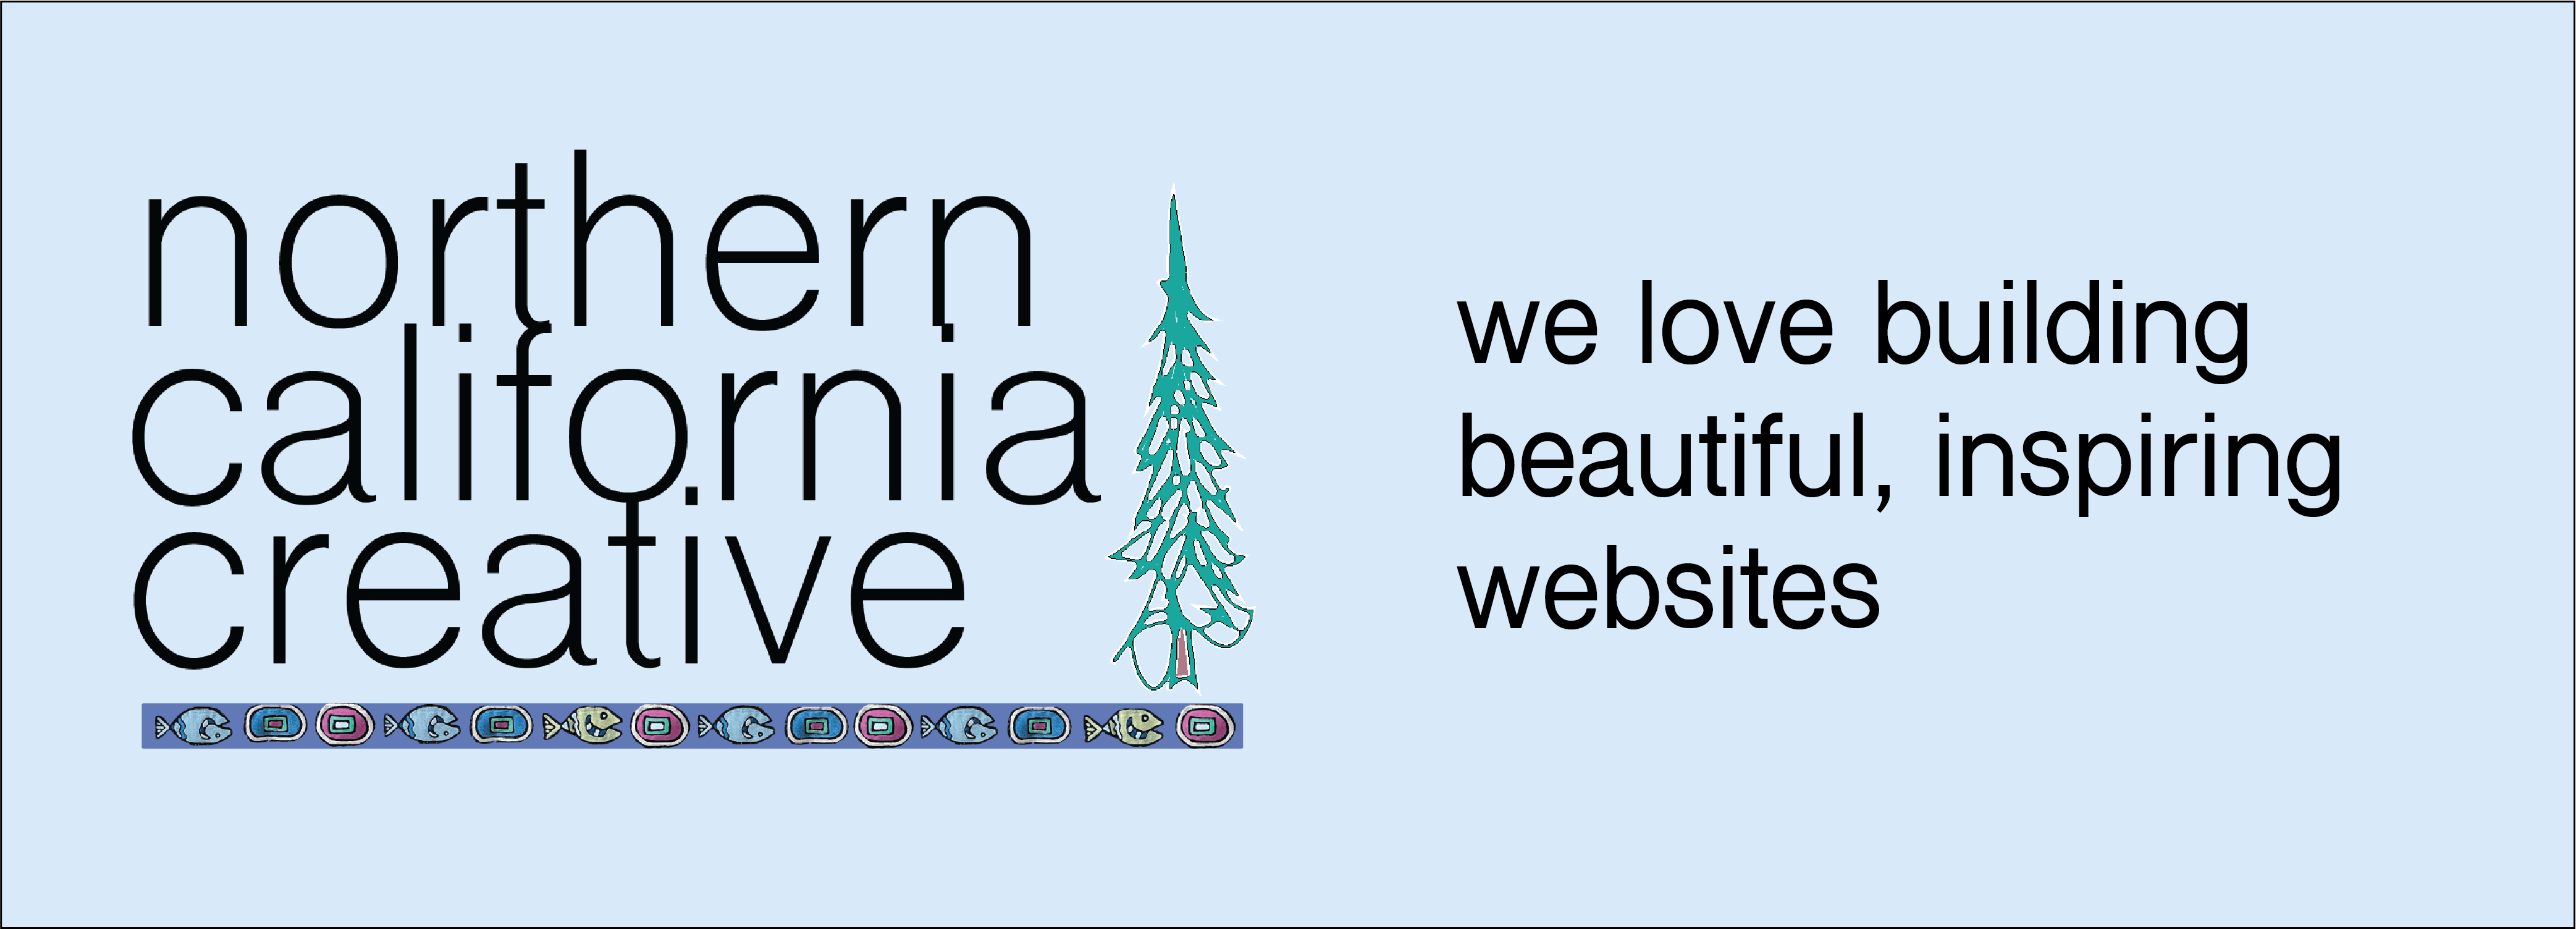 we love to build beautiful websites